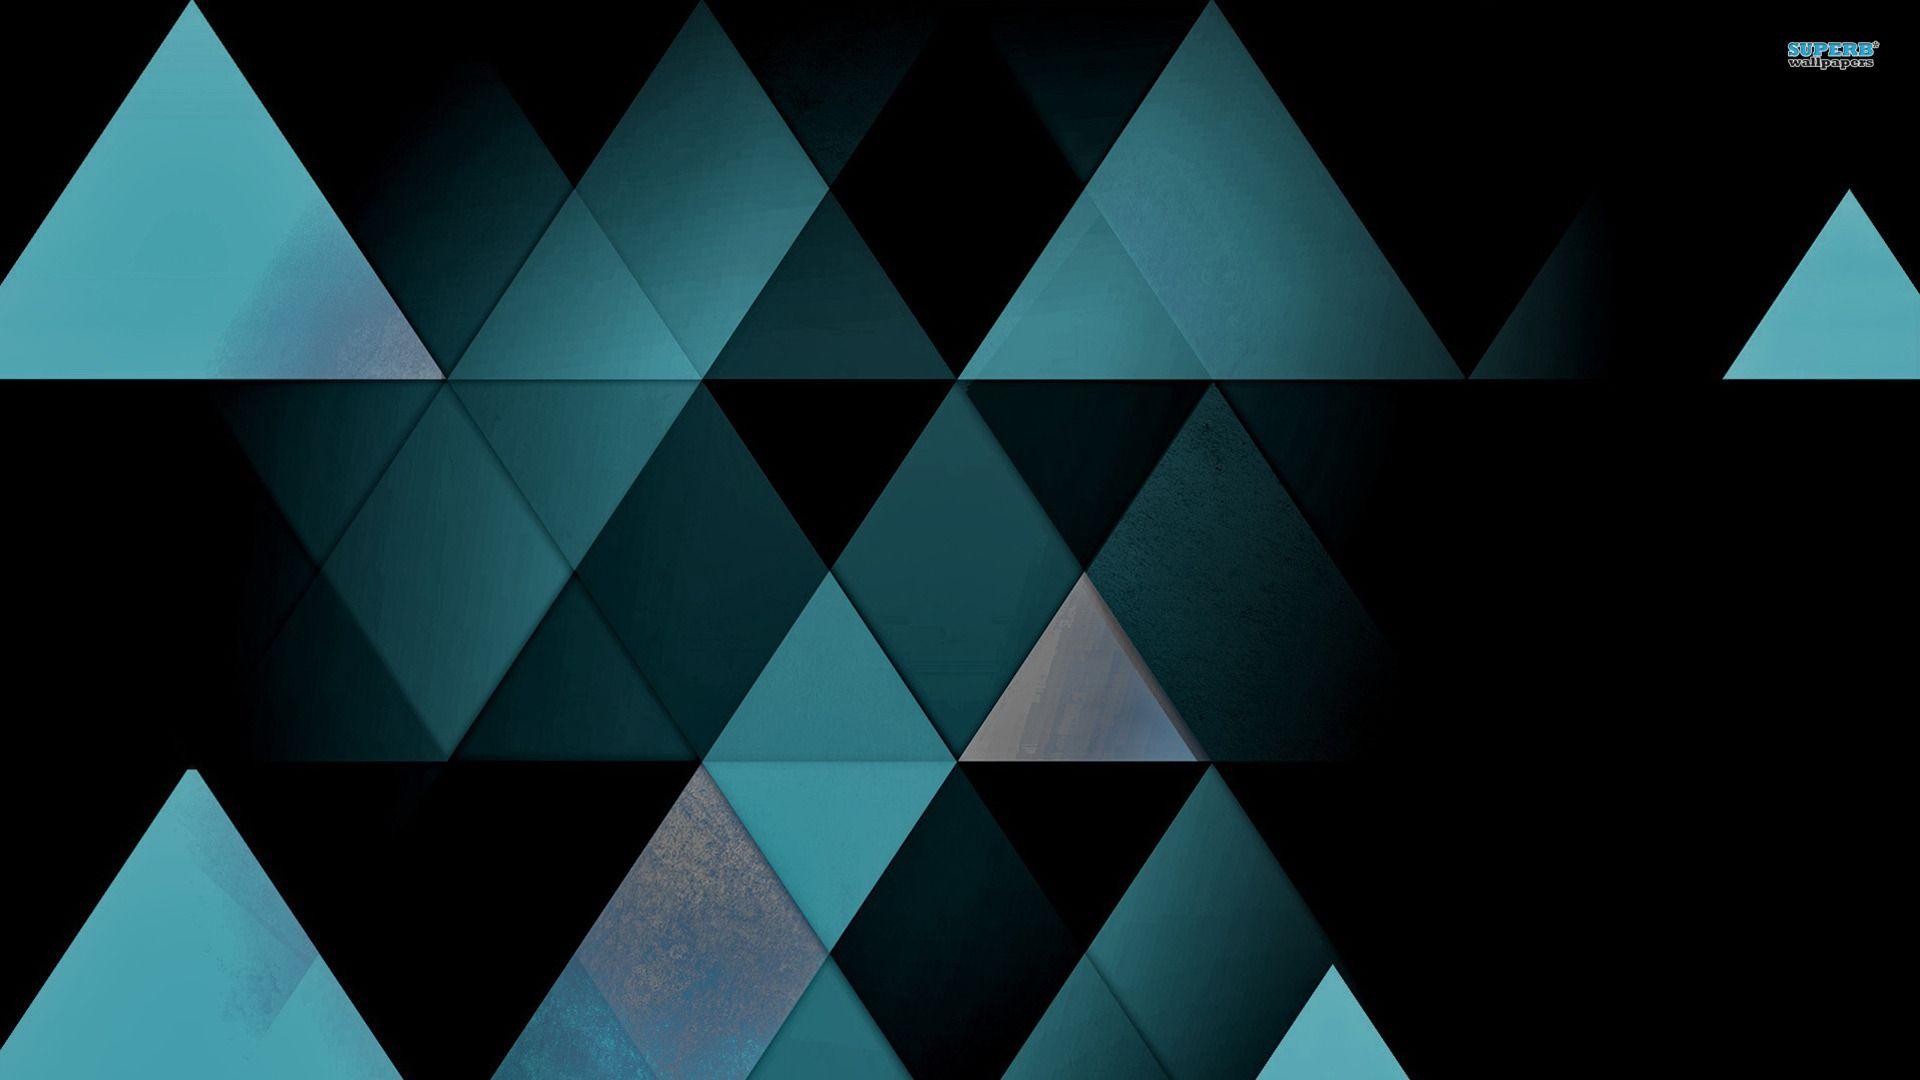 Mosaic Triangles 15658 (1920×1080)